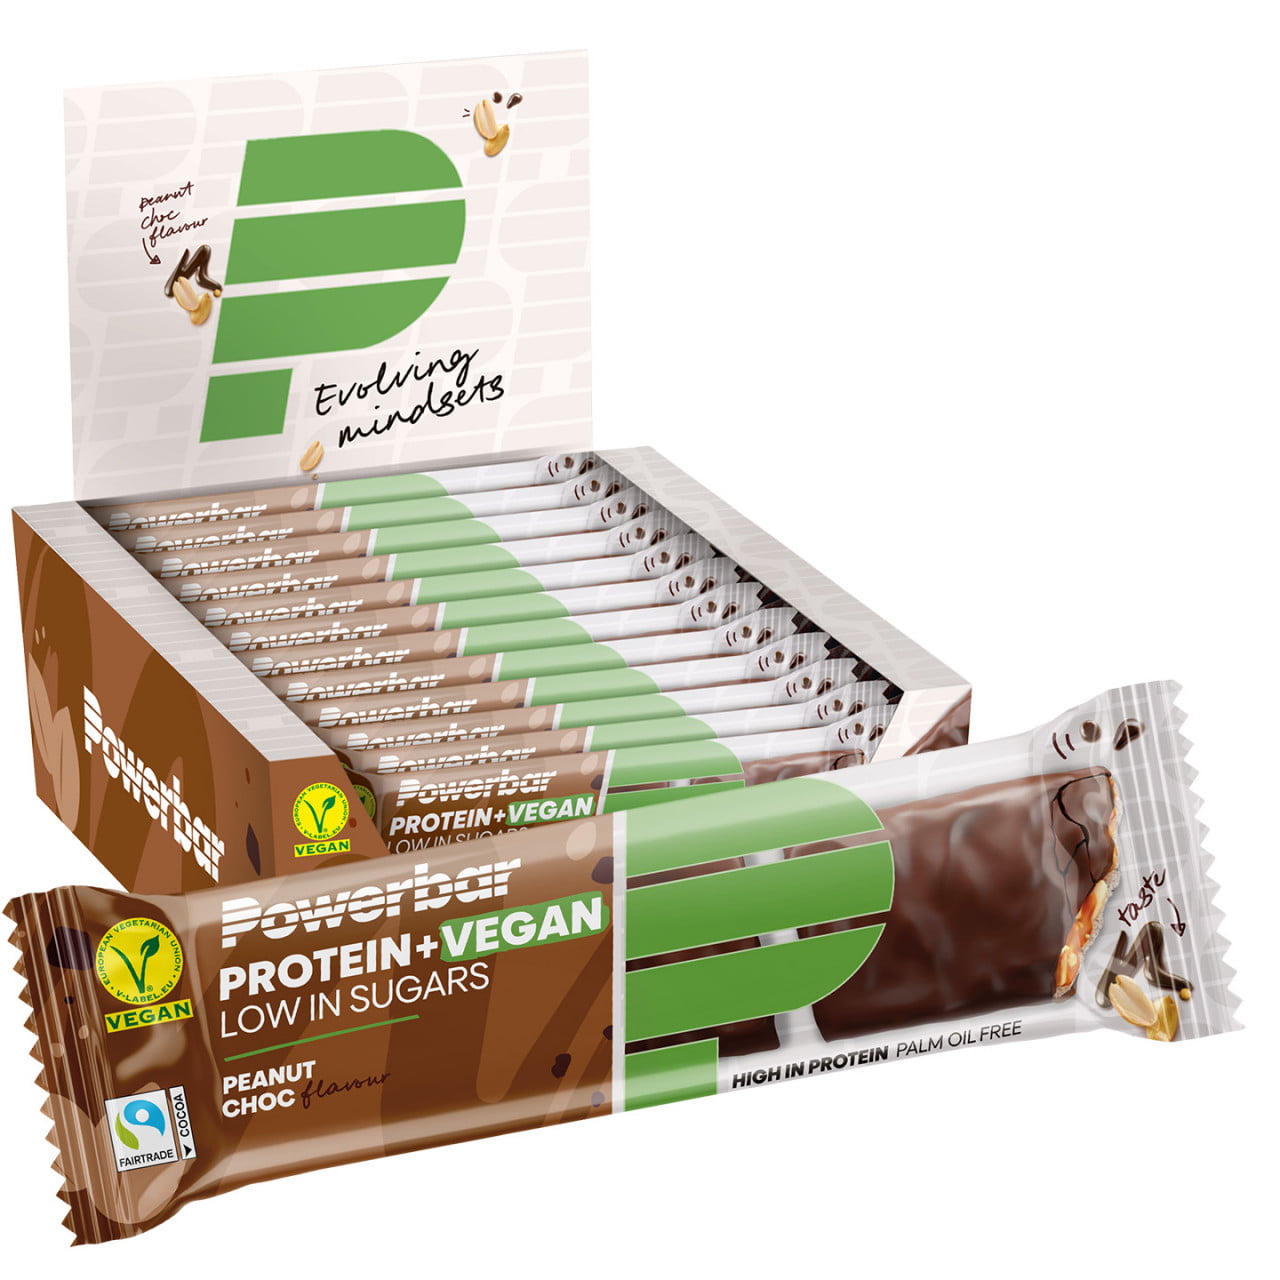 Protein+ vegano Bajo en Azúcares Peanut Chocolate 12 St.